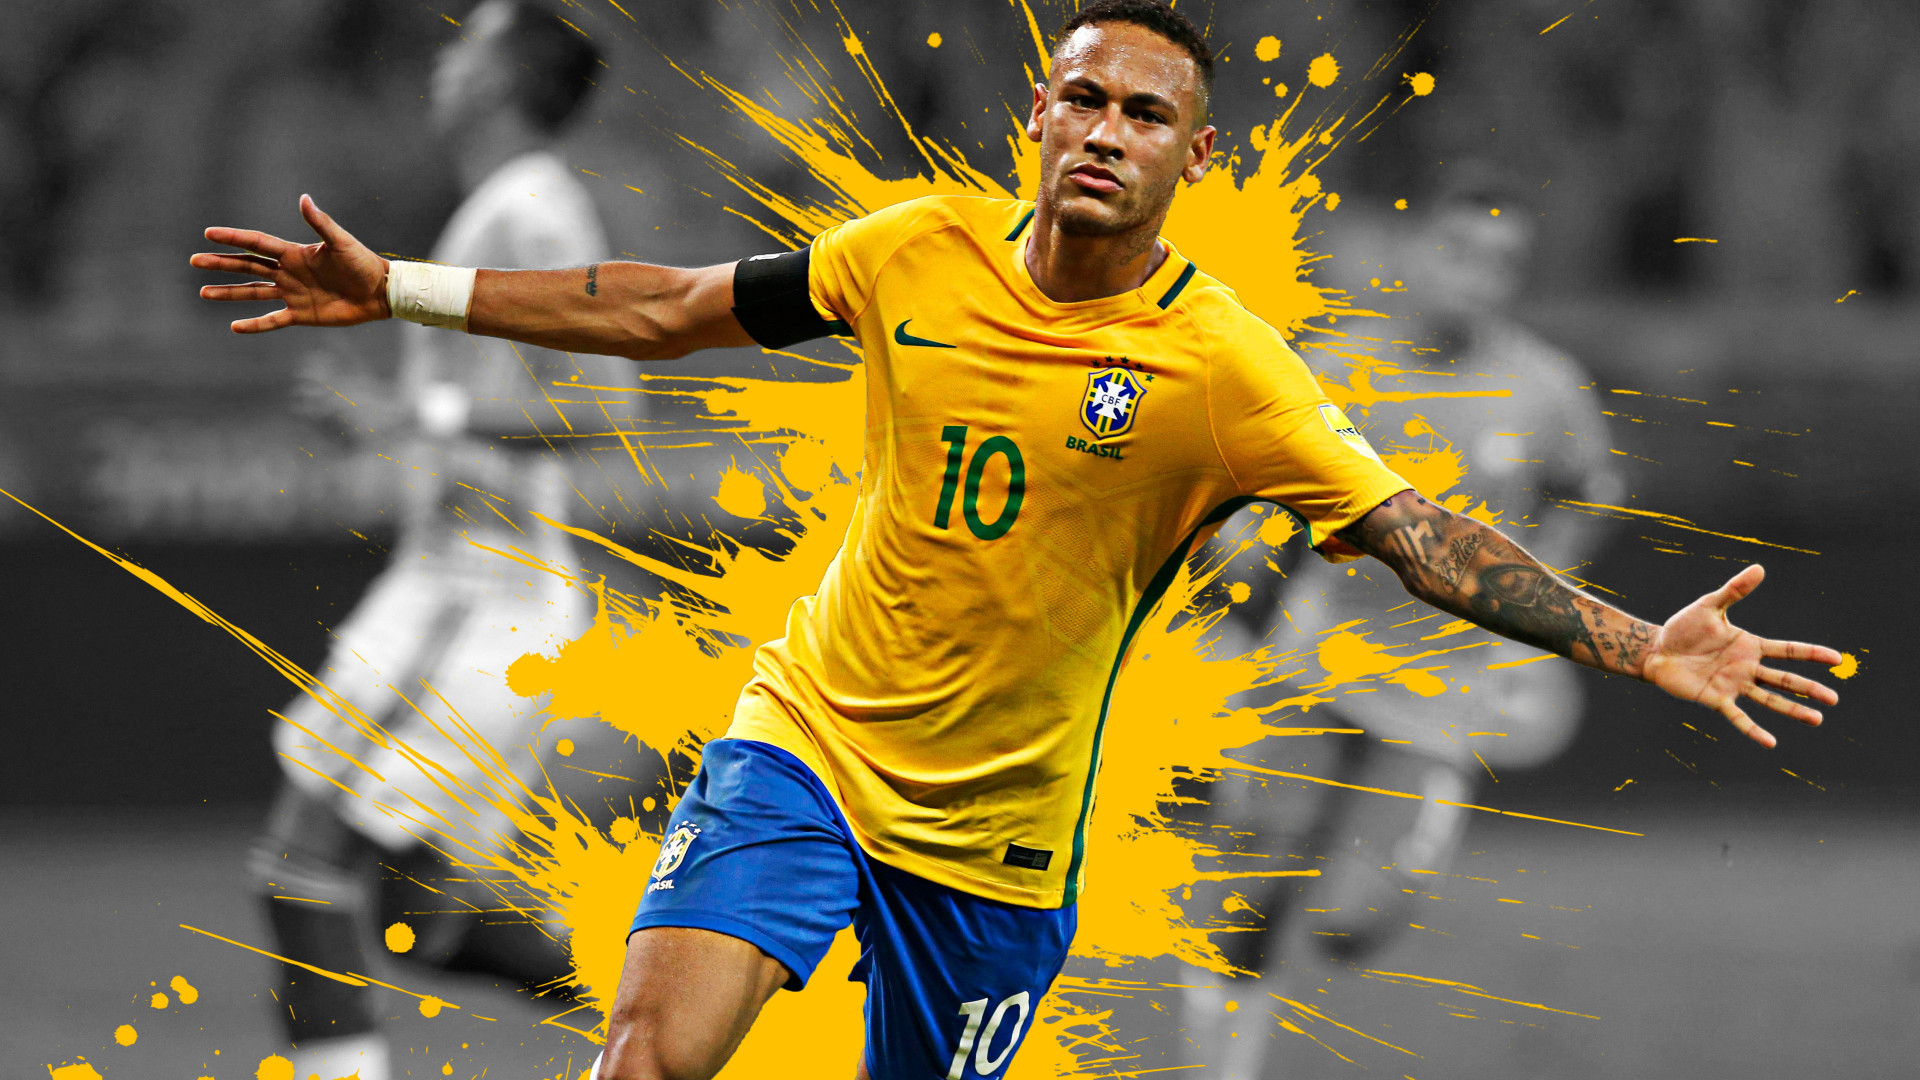 Download wallpaper: Neymar for Brazil national team 1920x1080